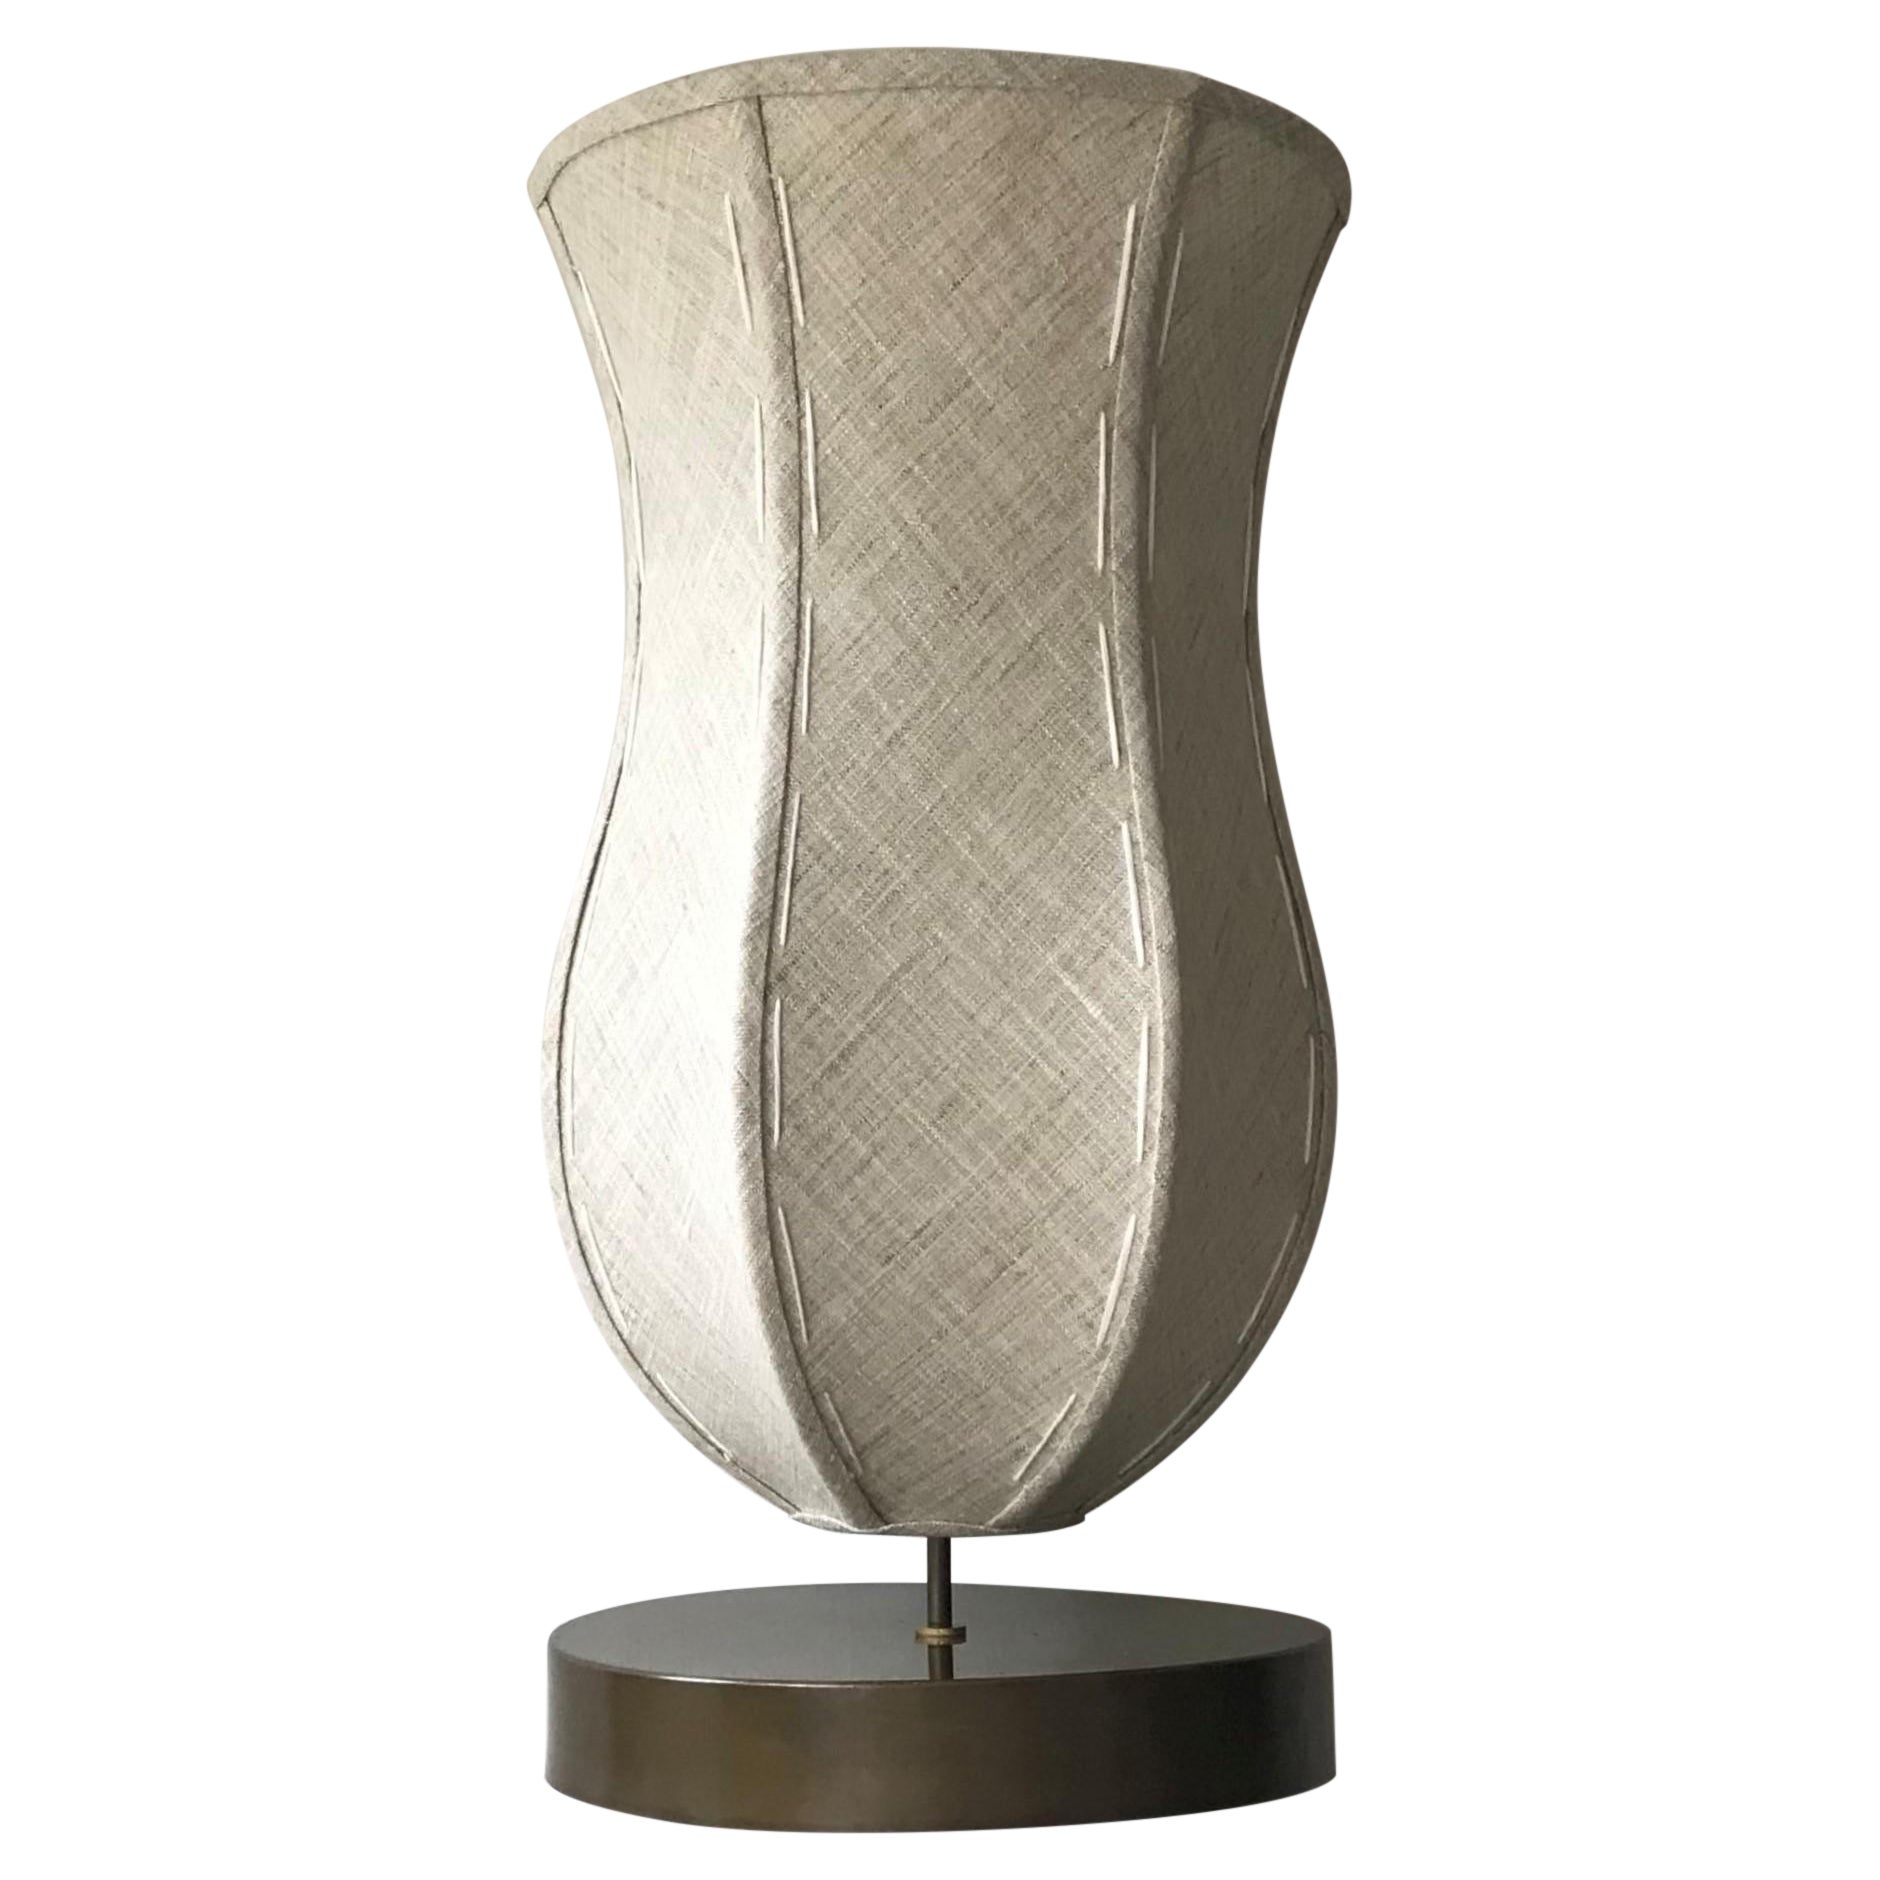 Lampe tulipe de Wende Reid organique, moderne, minimaliste, sculpturale, cubiste, patinée en vente